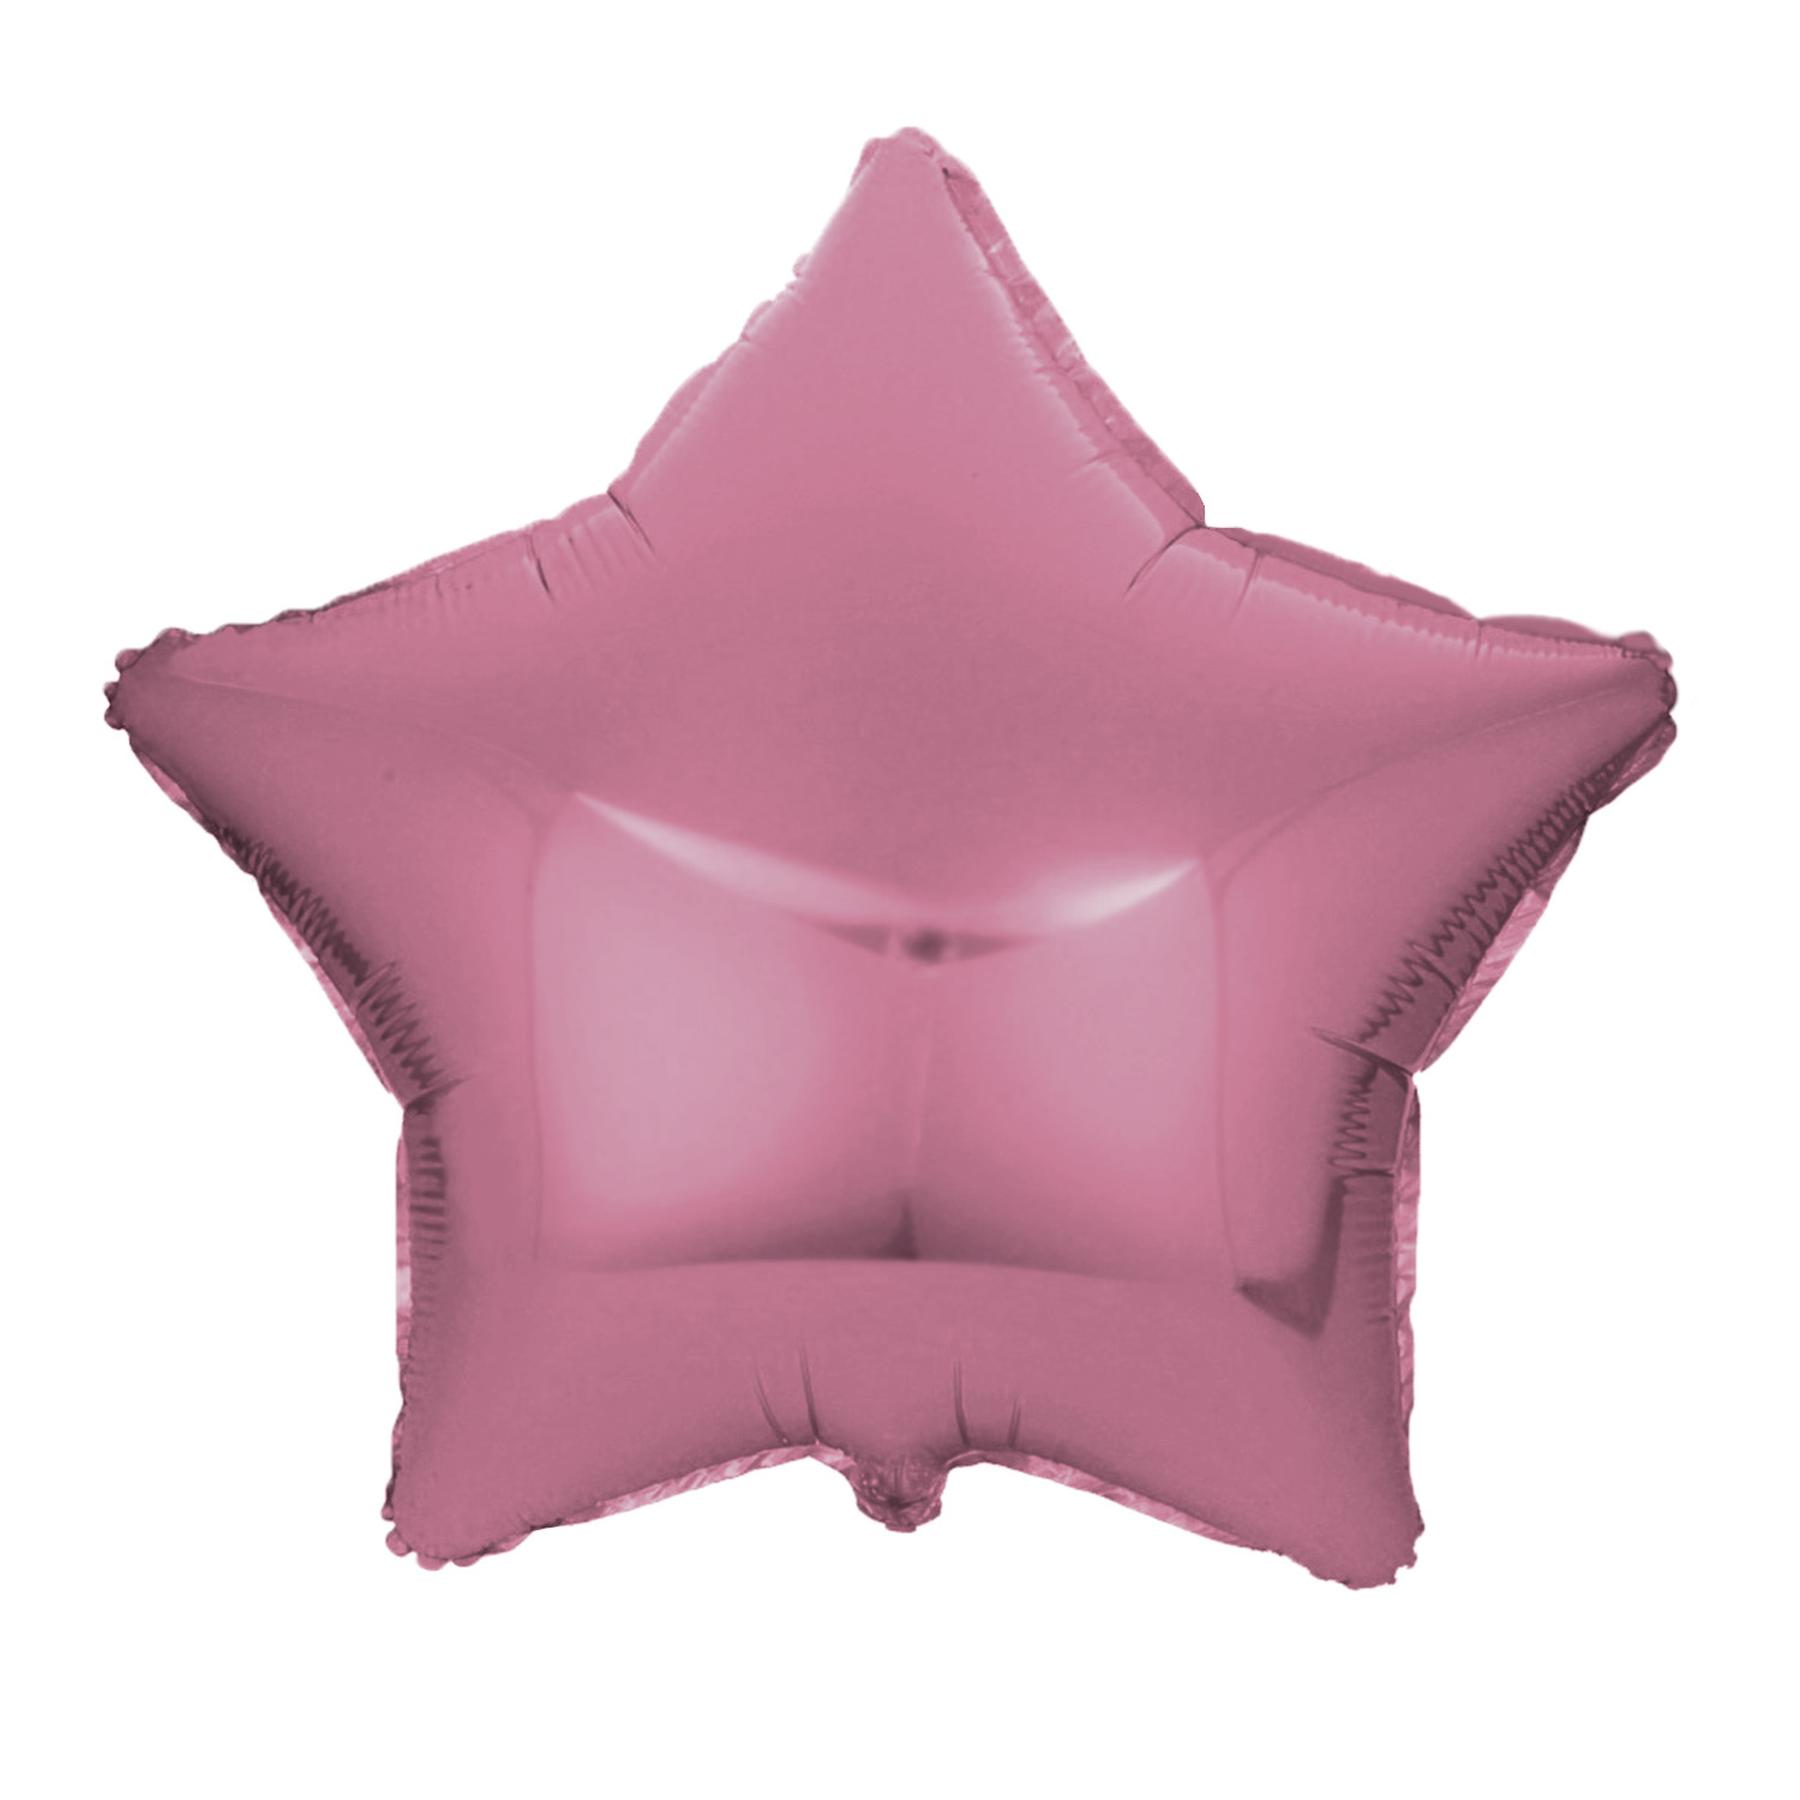 Folienballon Stern, dunkles rosa, ca. 45 cm